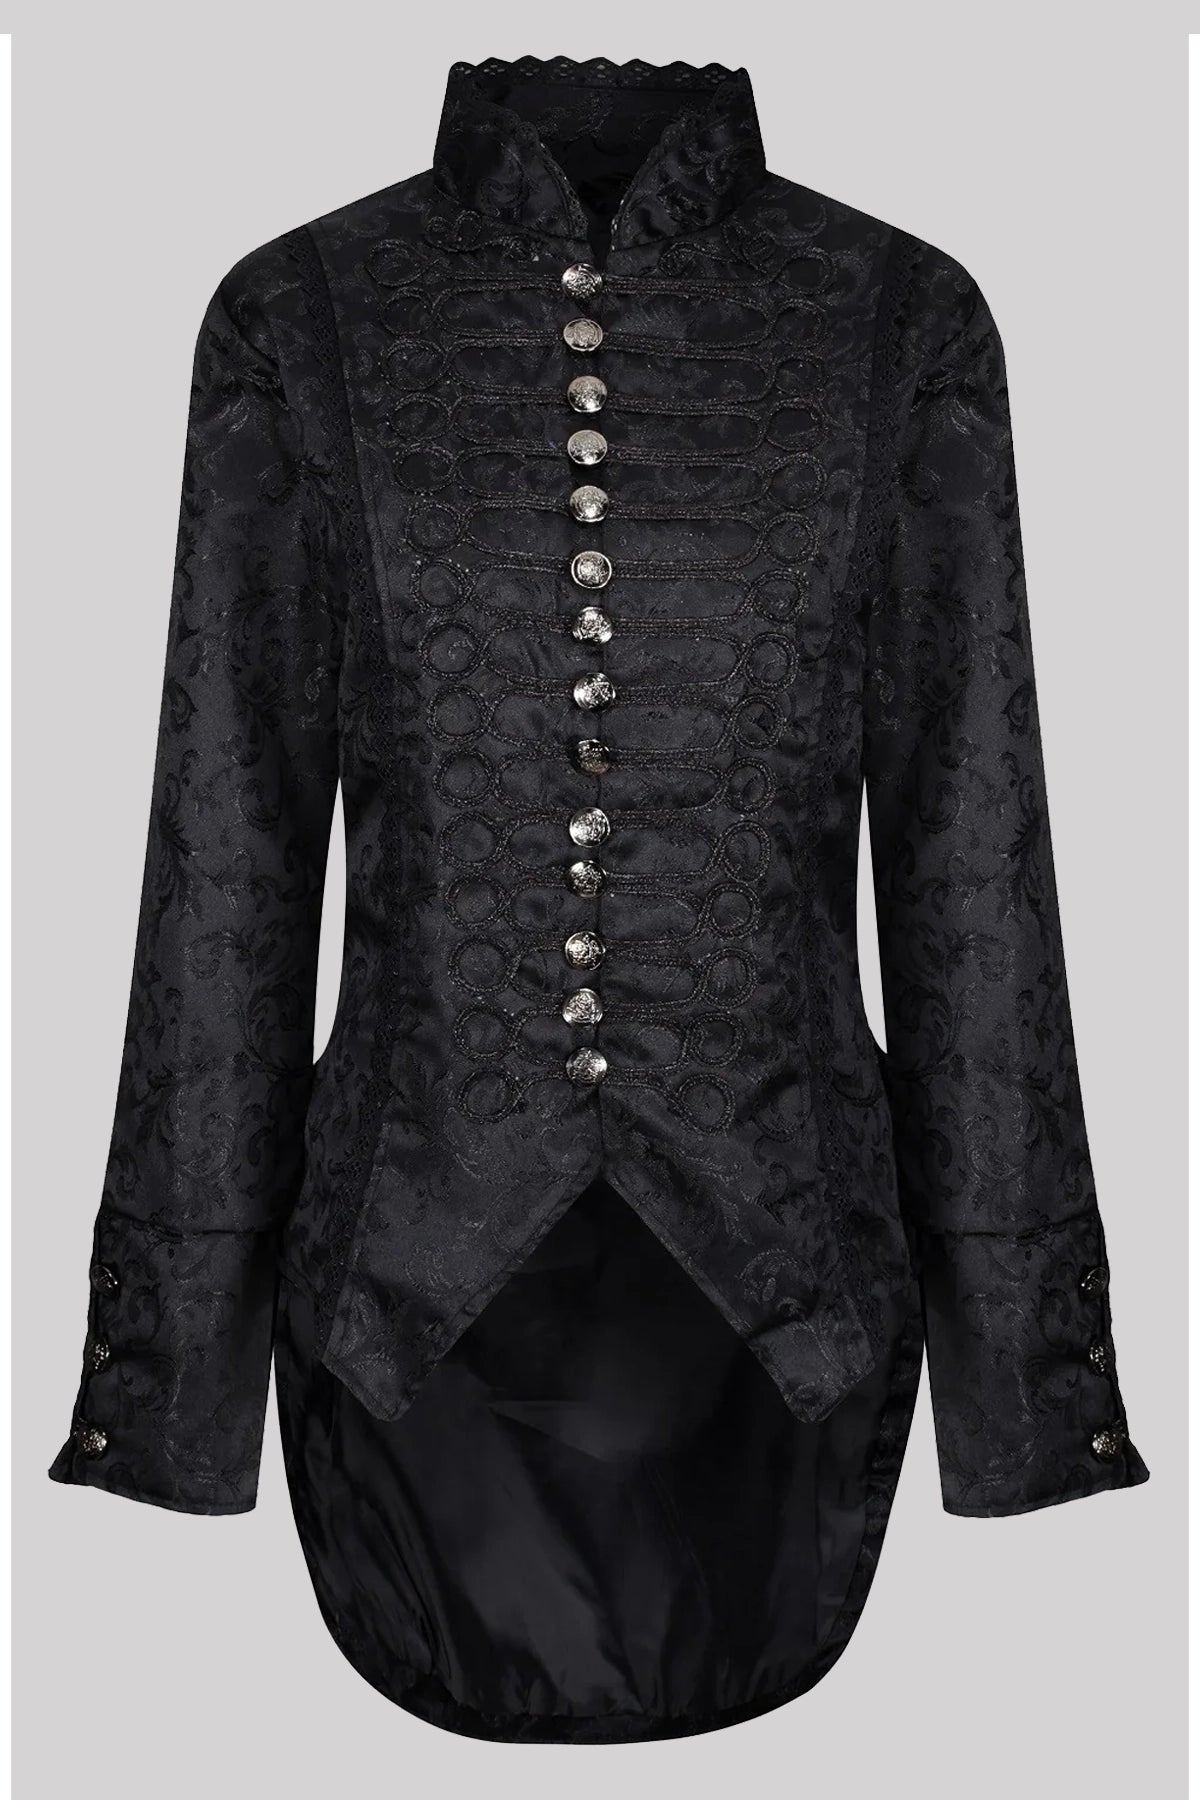 Women's Black Brocade Gothic Tailcoat